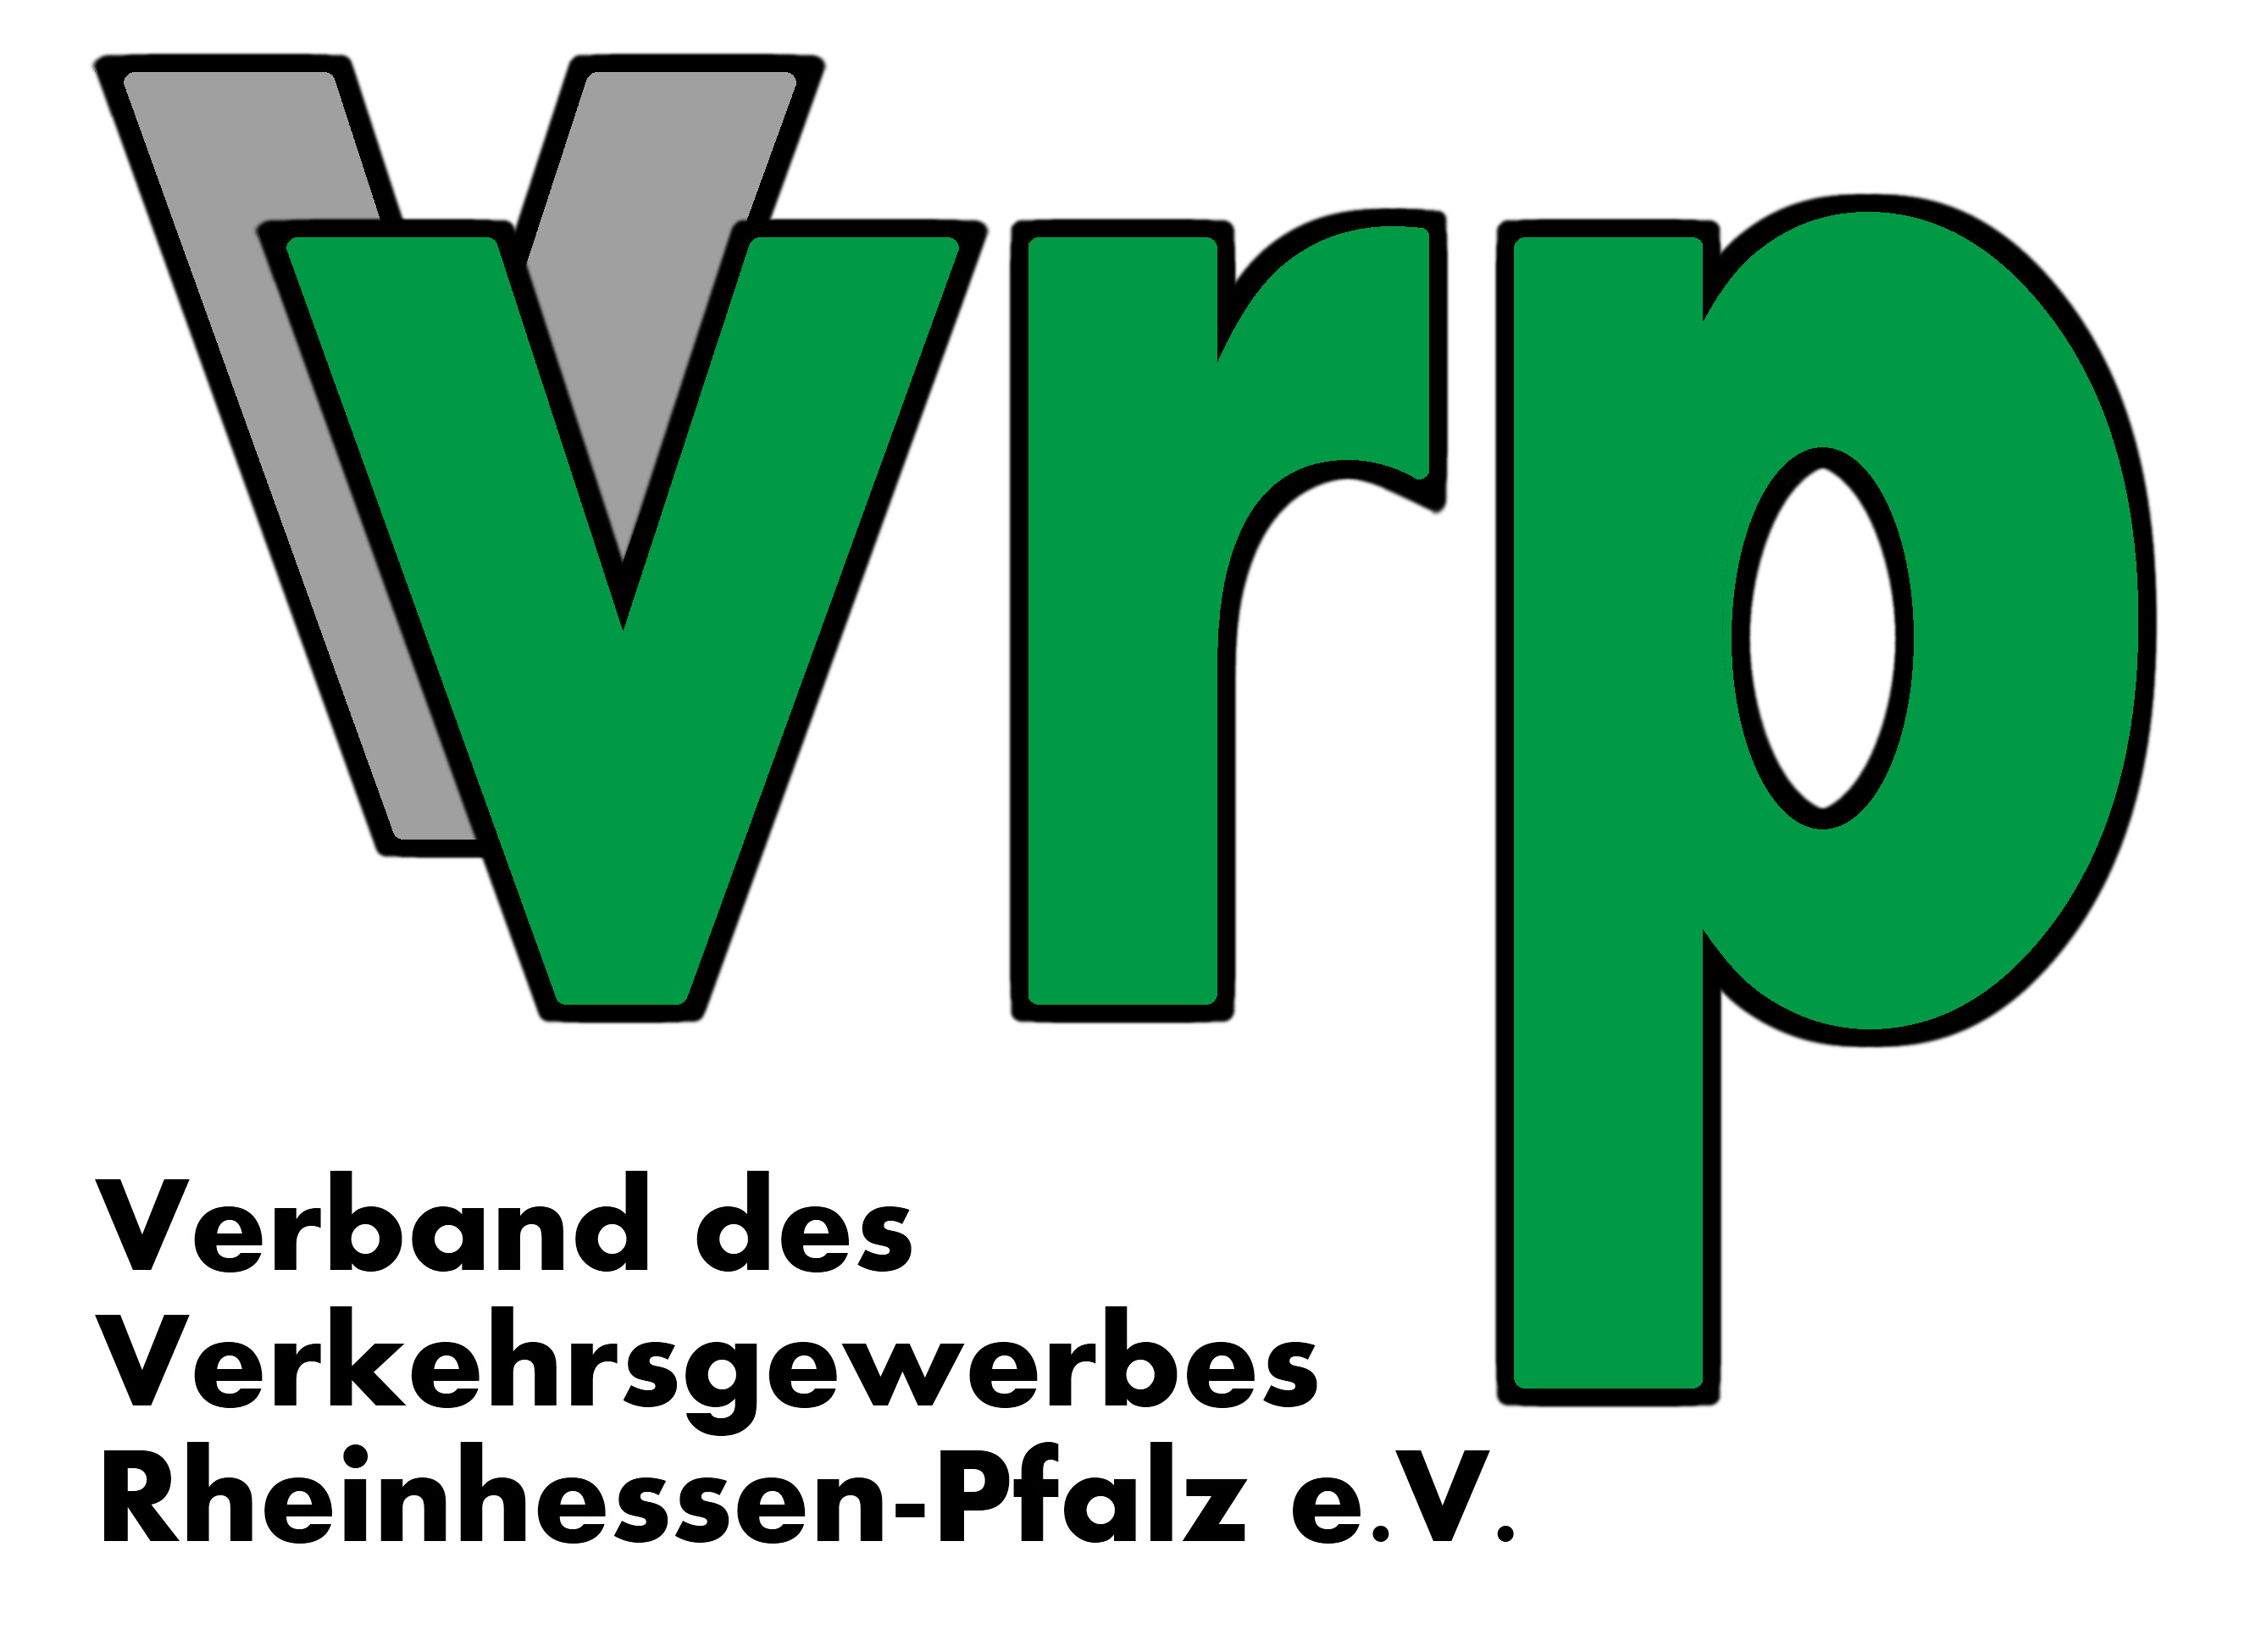 Verband des Verkehrsgewerbes Rheinhessen-Pfalz (VVRP) e.V.